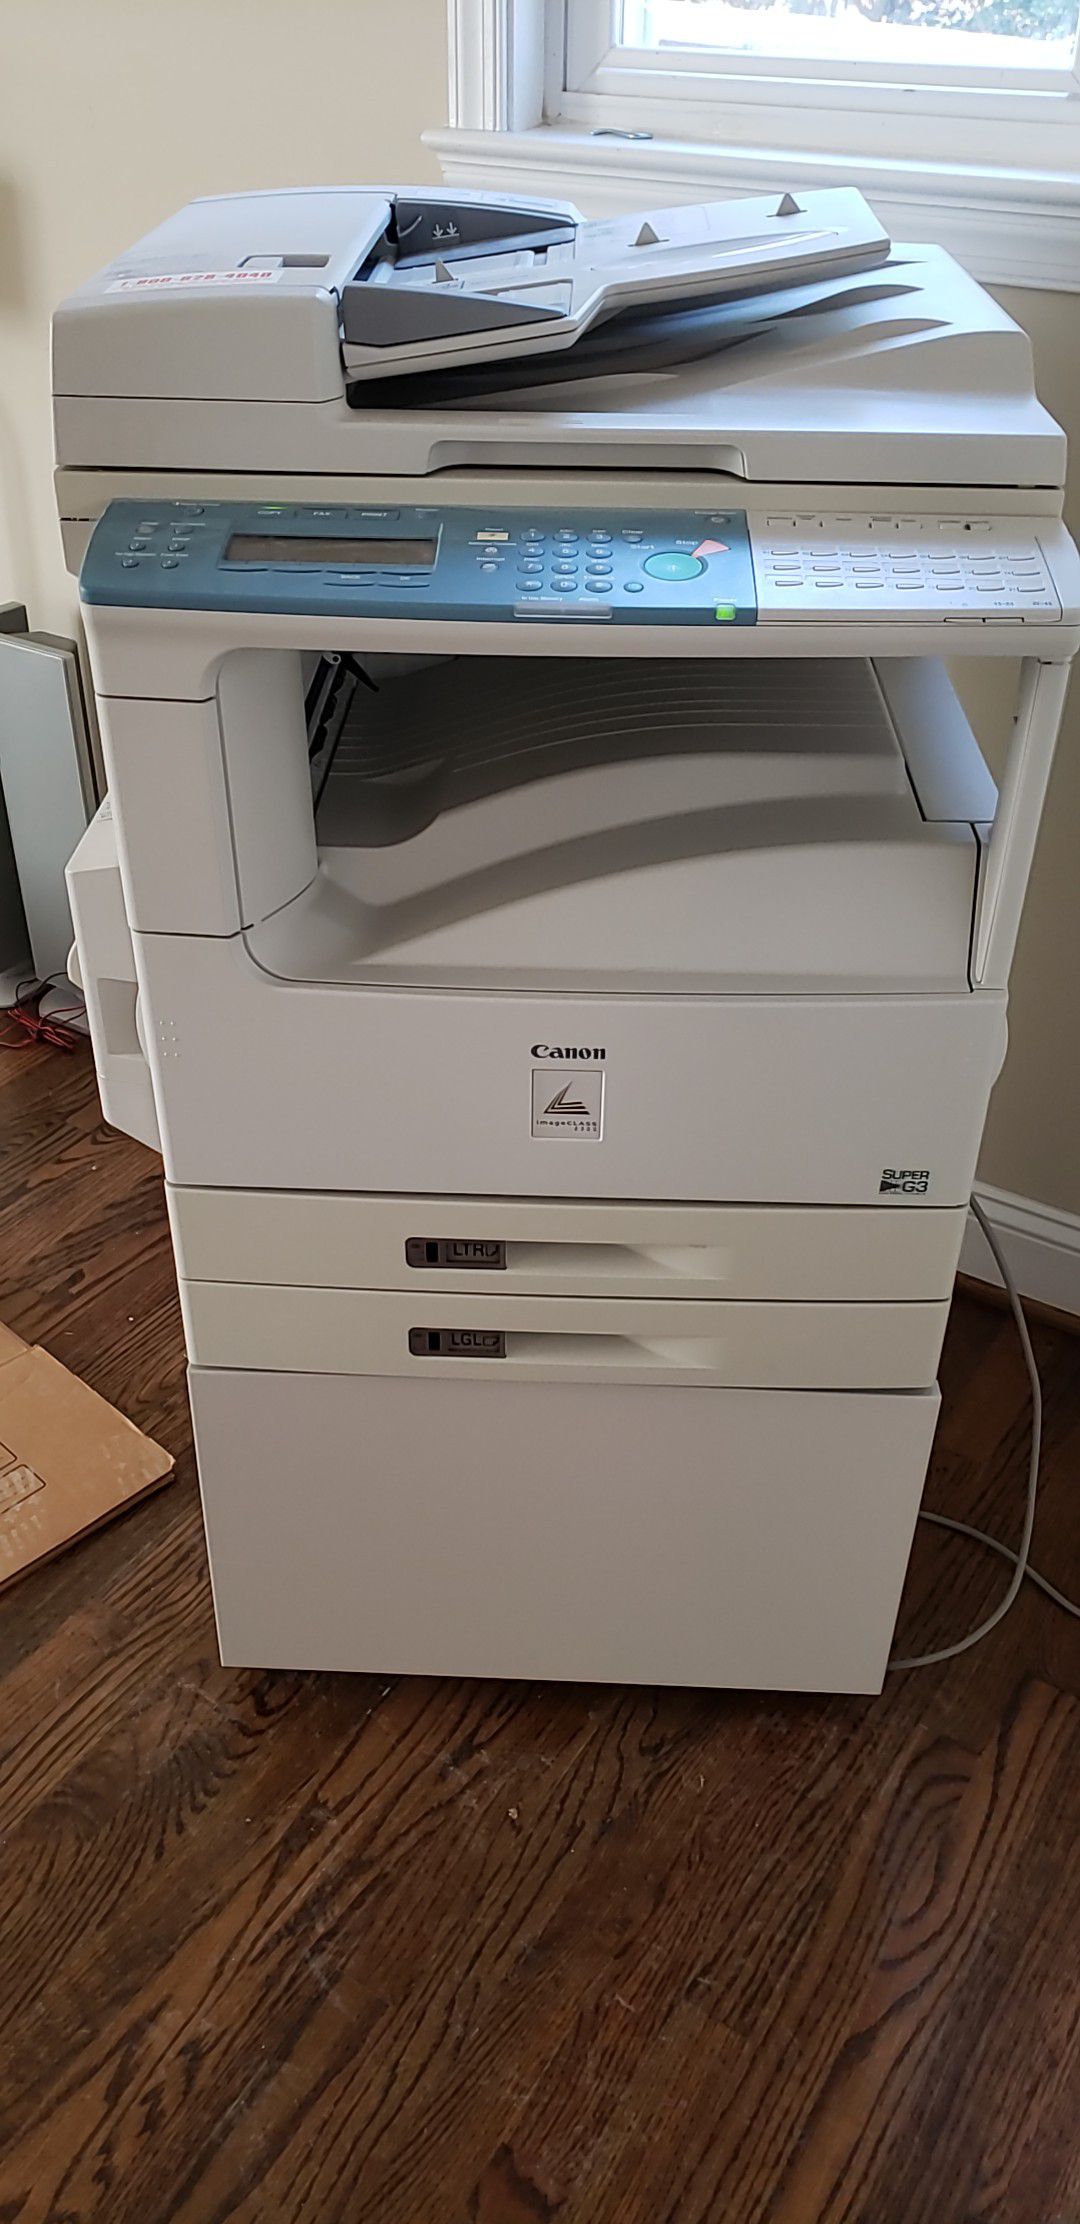 Printer and fax machine